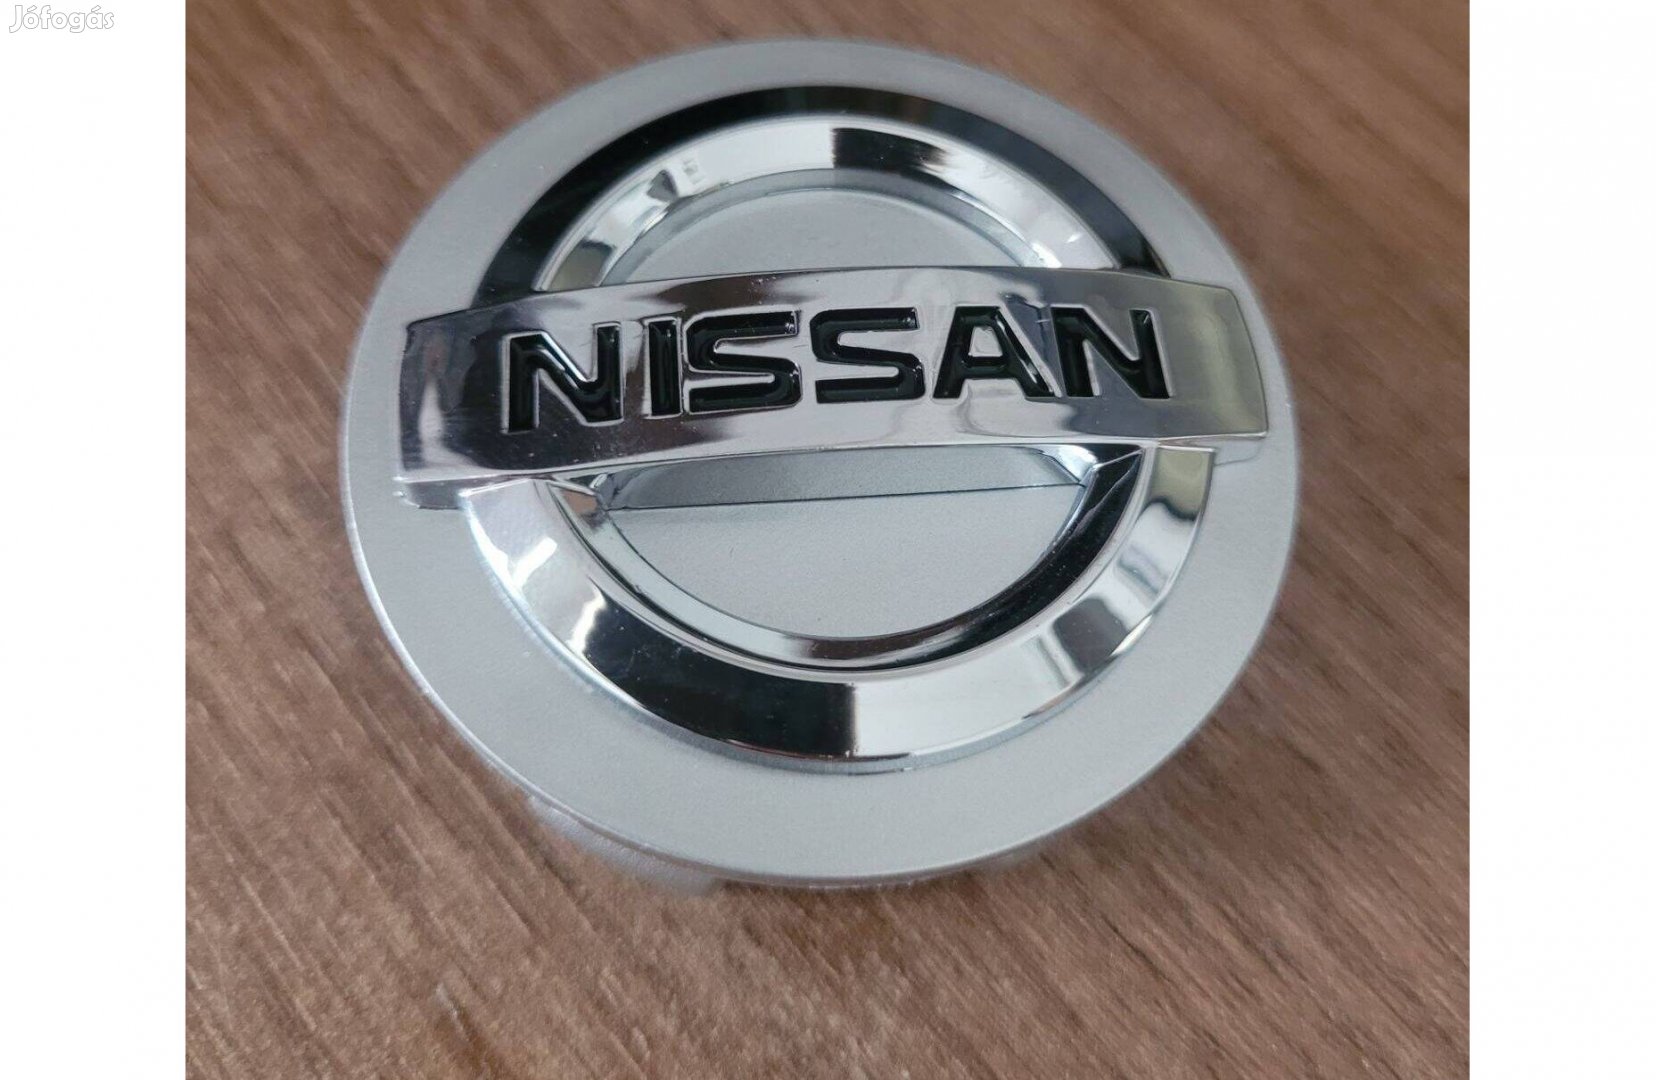 Nissan felni alufelni kupak közép porvédő 60mm